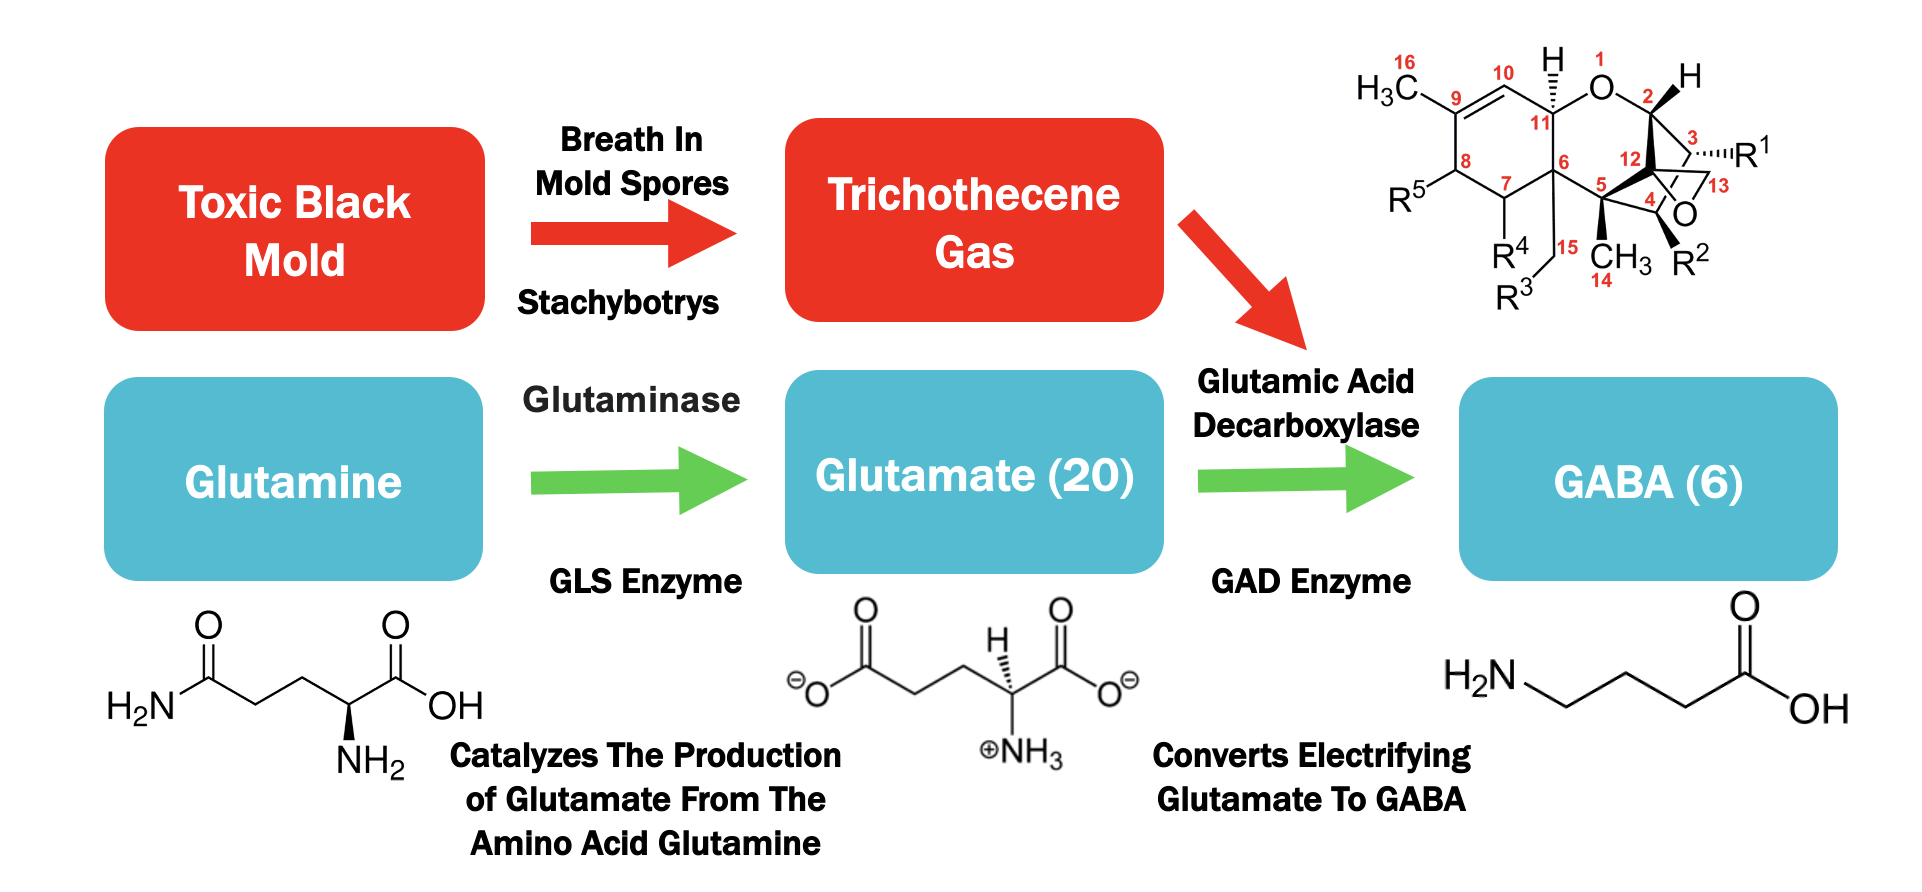 Gad enzyme deficiency results in excess glutamate uptake